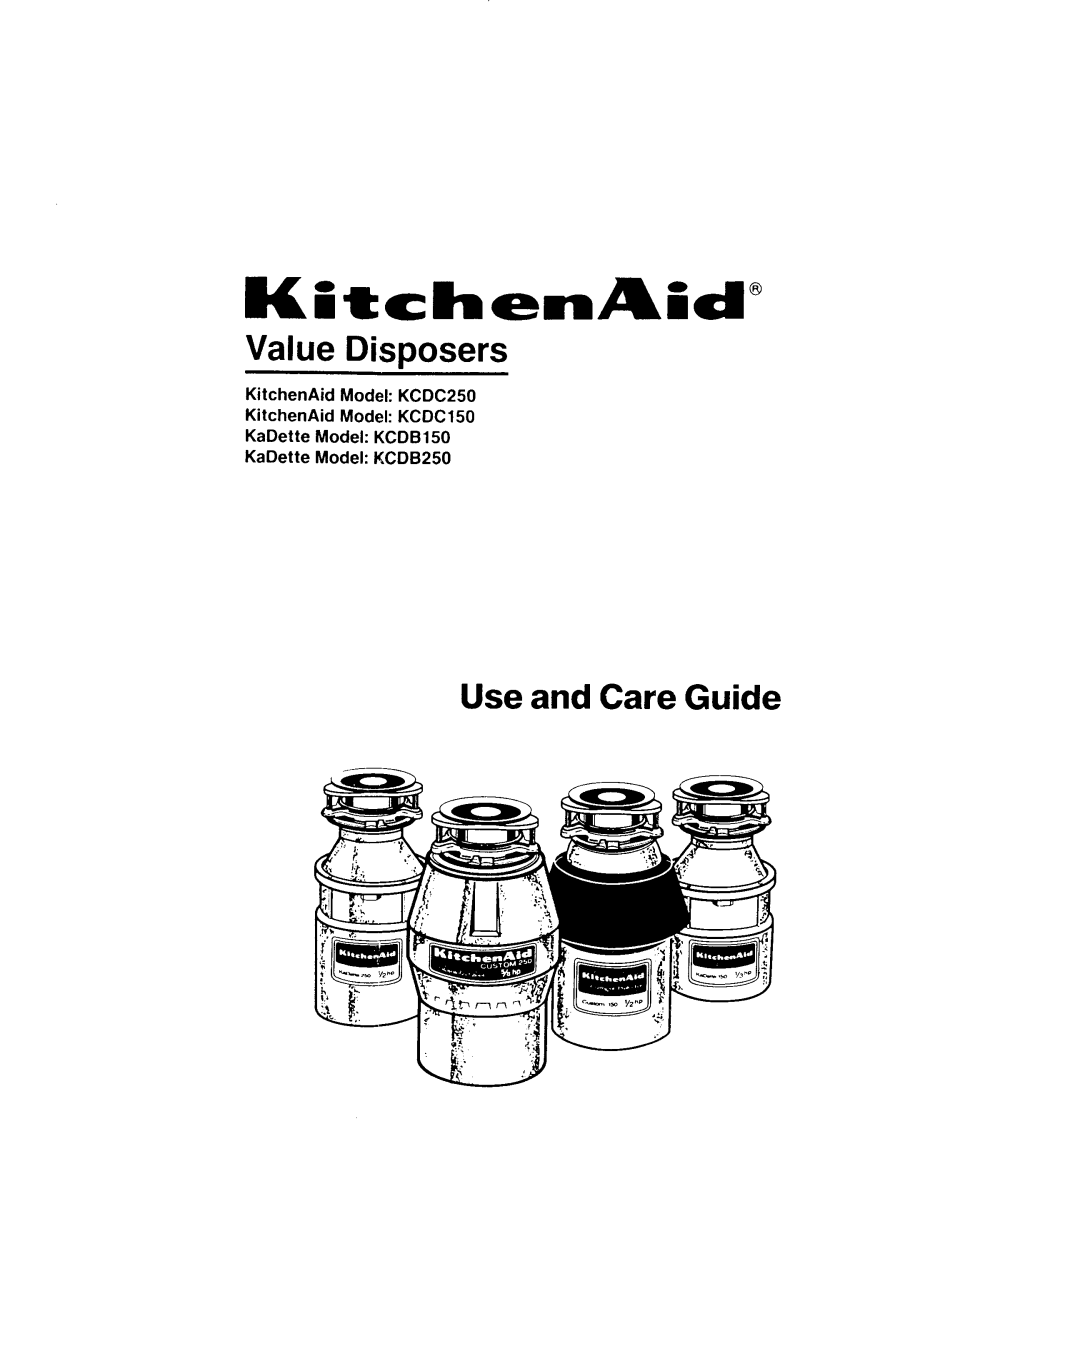 KitchenAid KCDC150, KCDC250, KCDB250, KCDB150 manual 